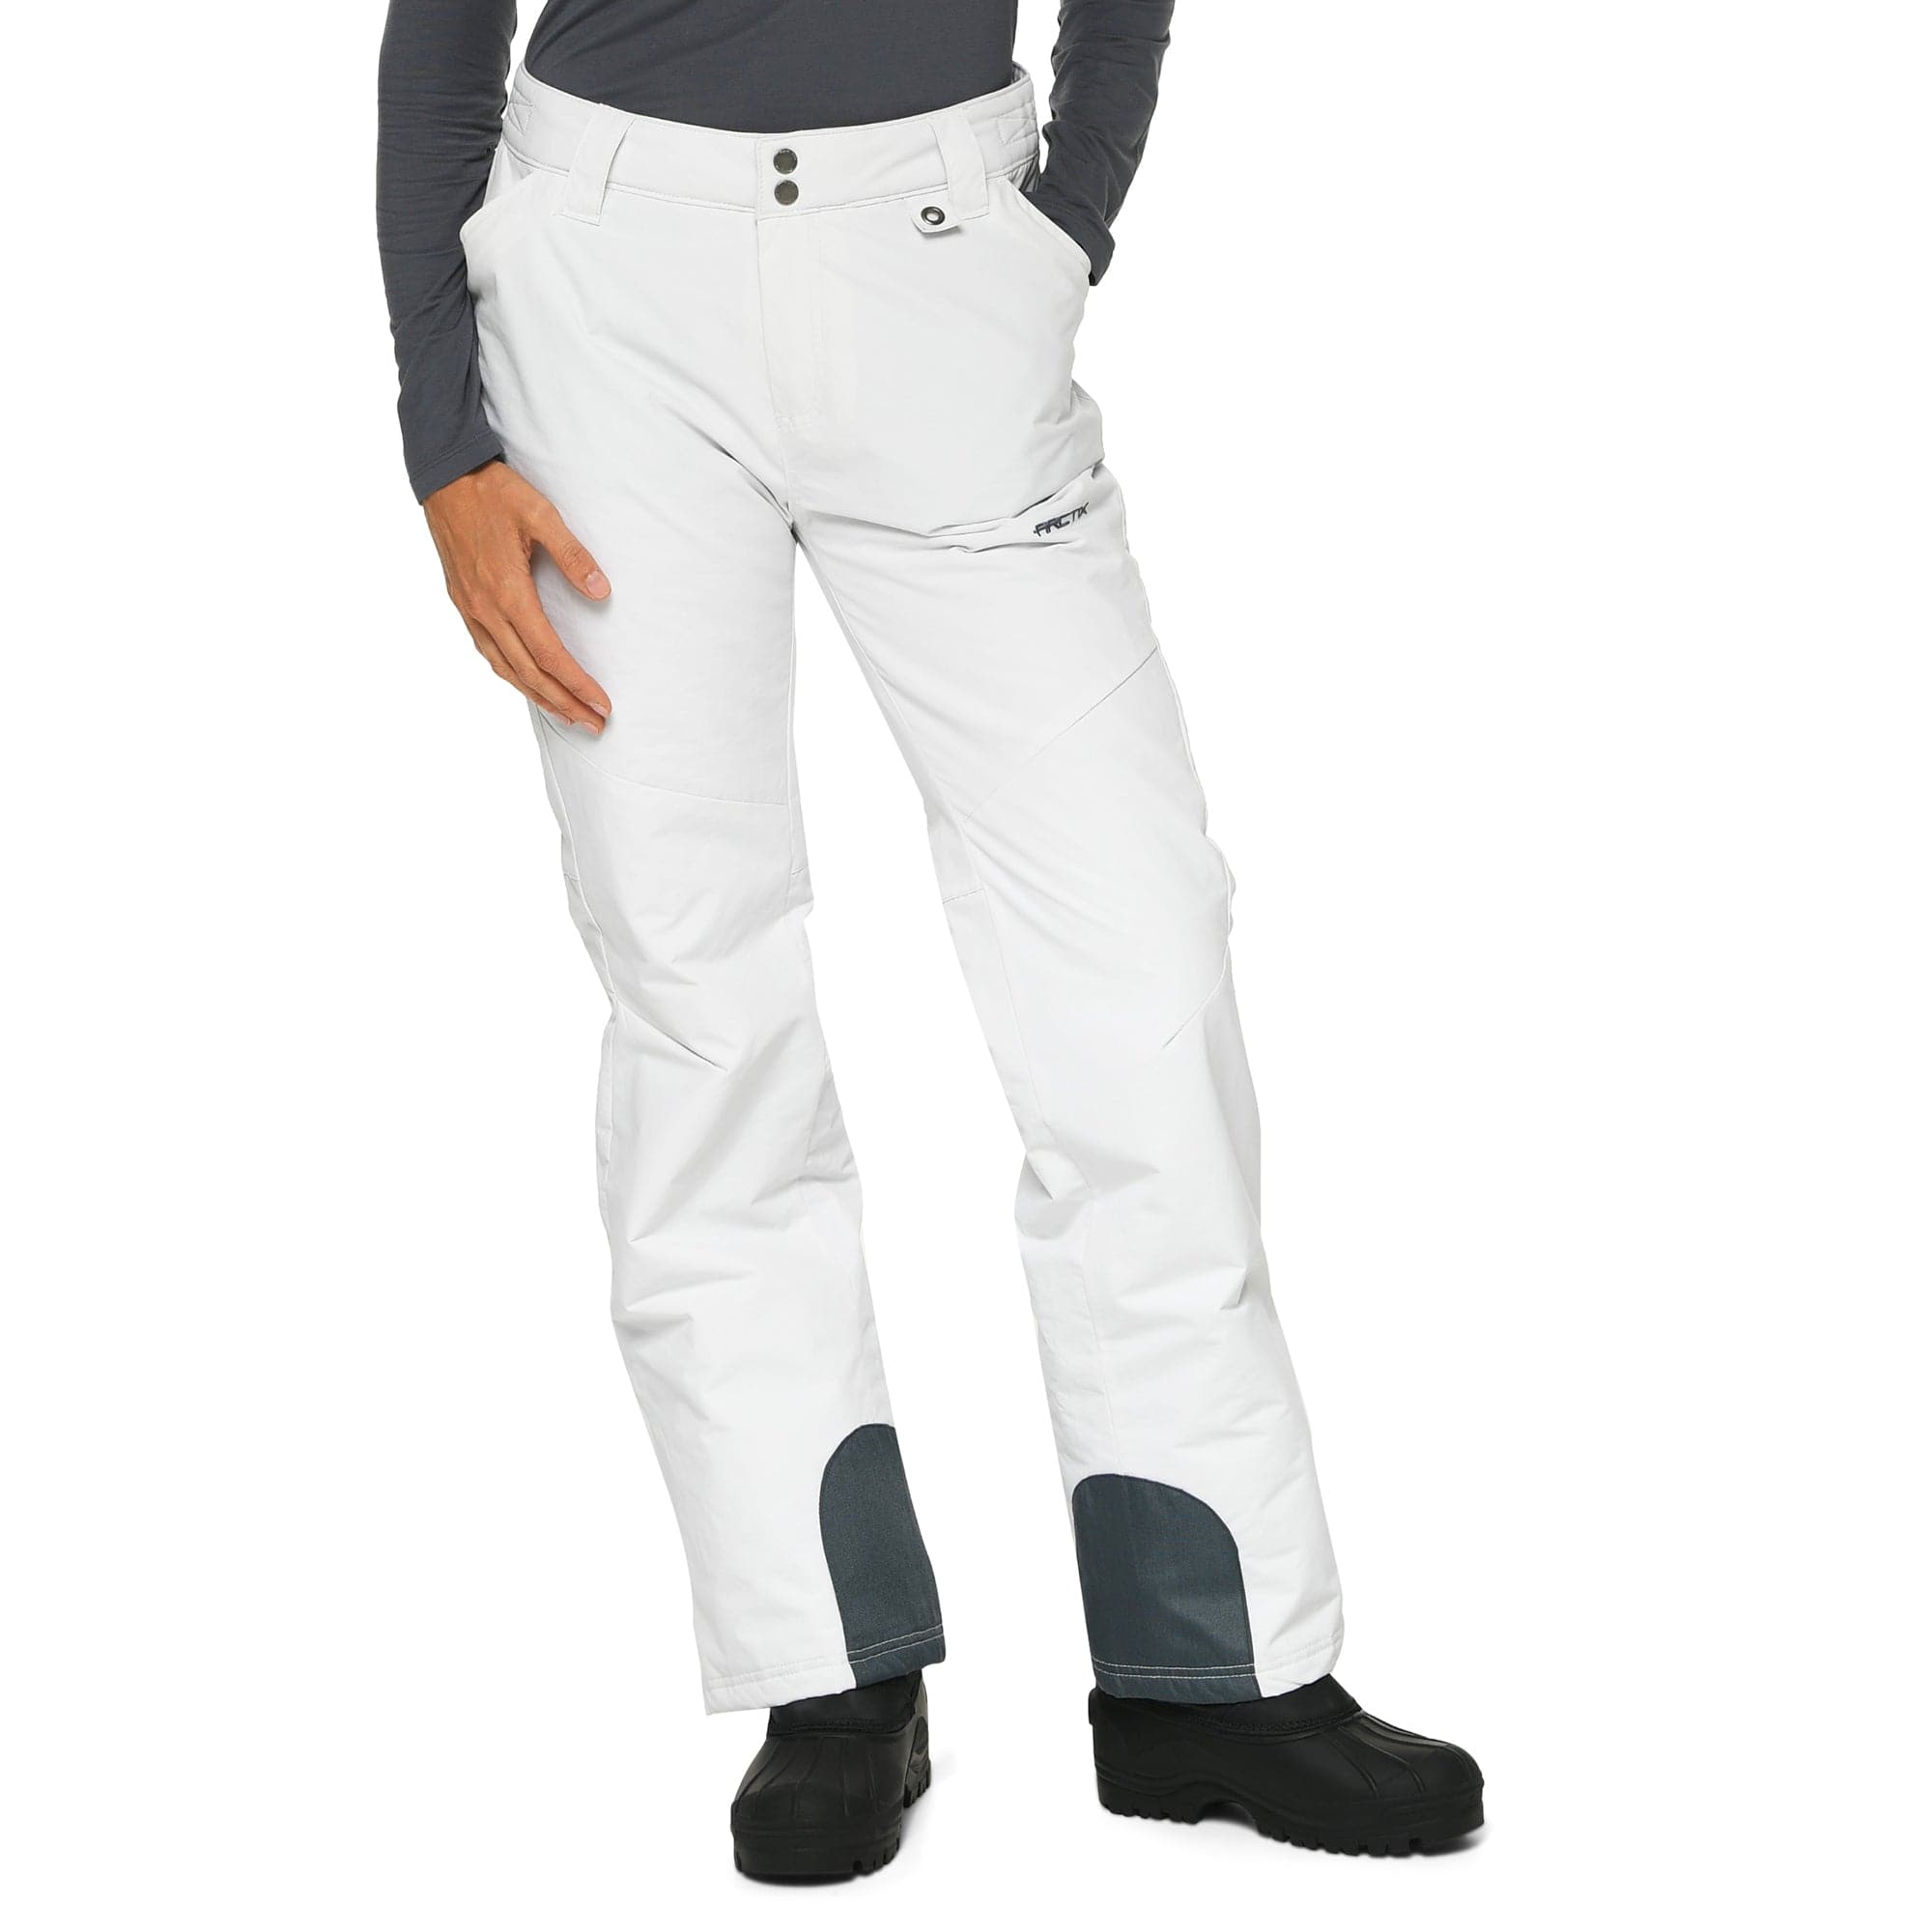 ARCTIX Women's Waterproof Insulated Ski Snow Pants Snowboard 5k Black Size  L for sale online